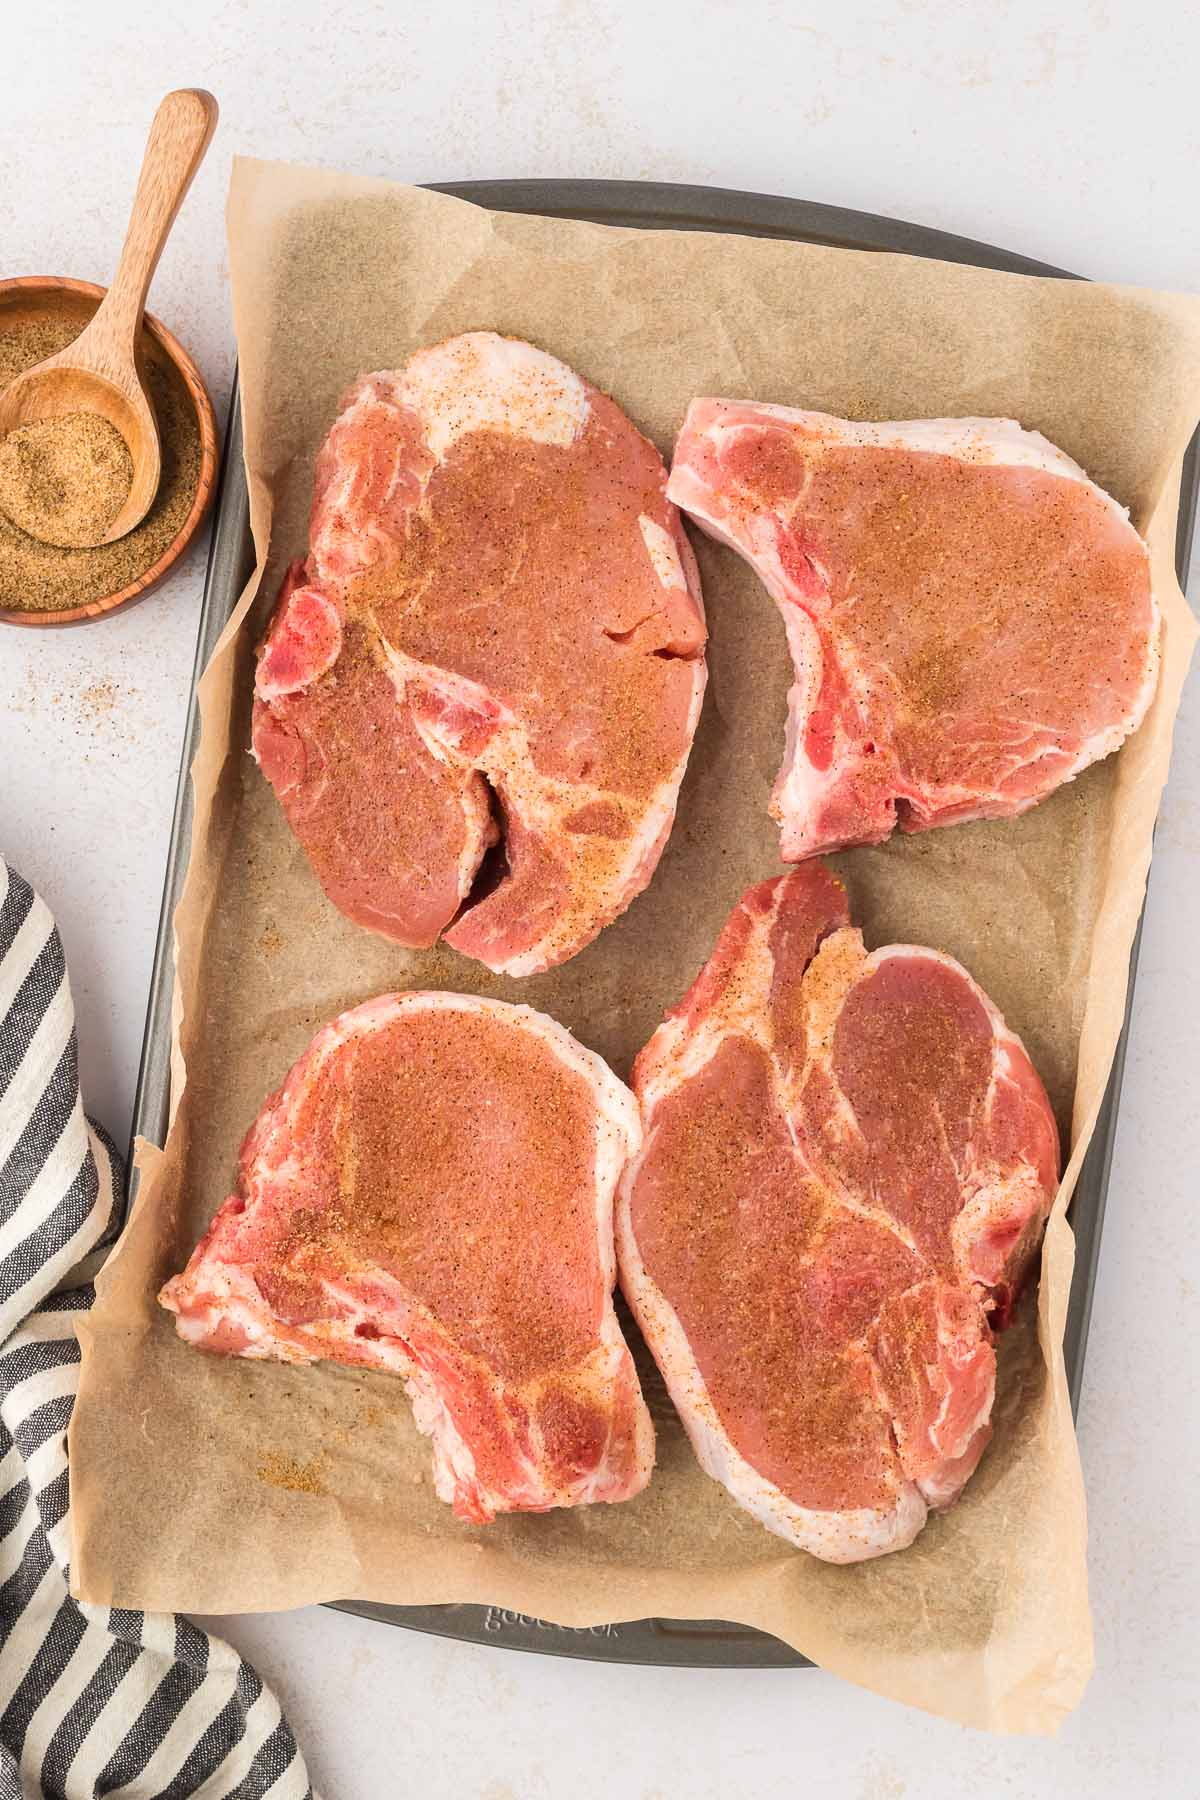 Pork chops on a board with seasoning.